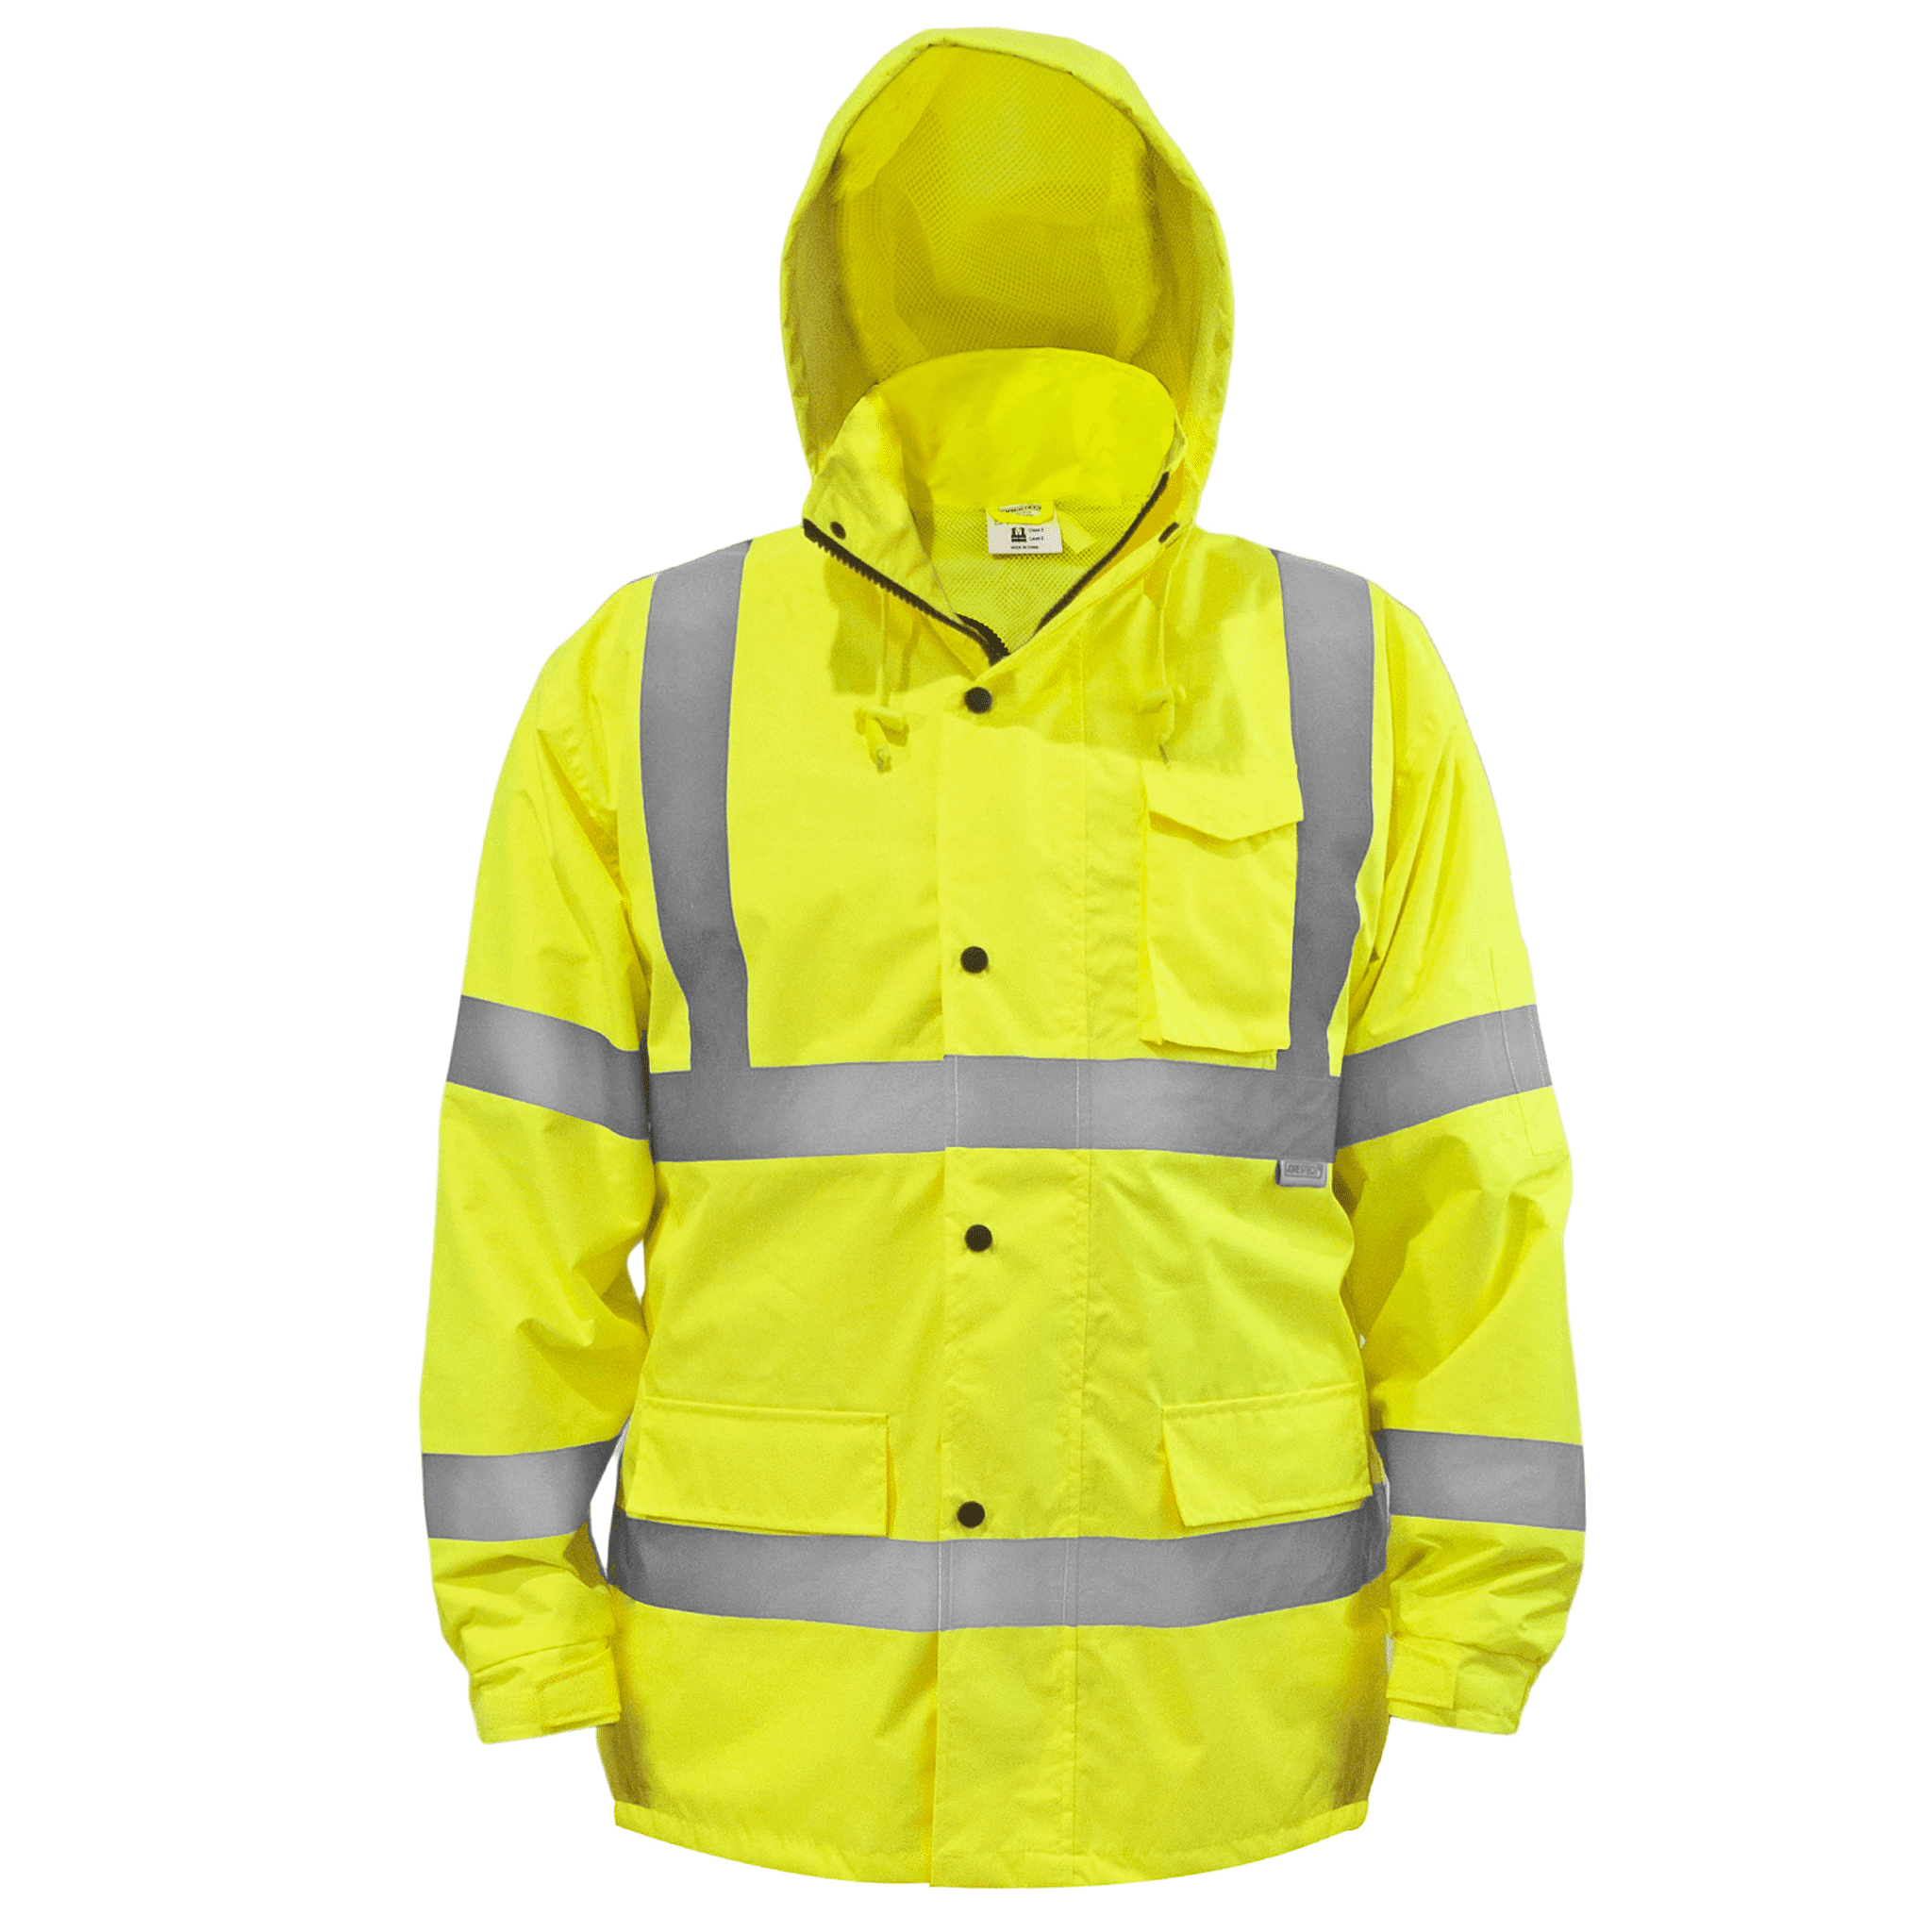 JORESTECH Hi-Vis Safety Rain Jacket, ANSI Class 3 (Yellow, S